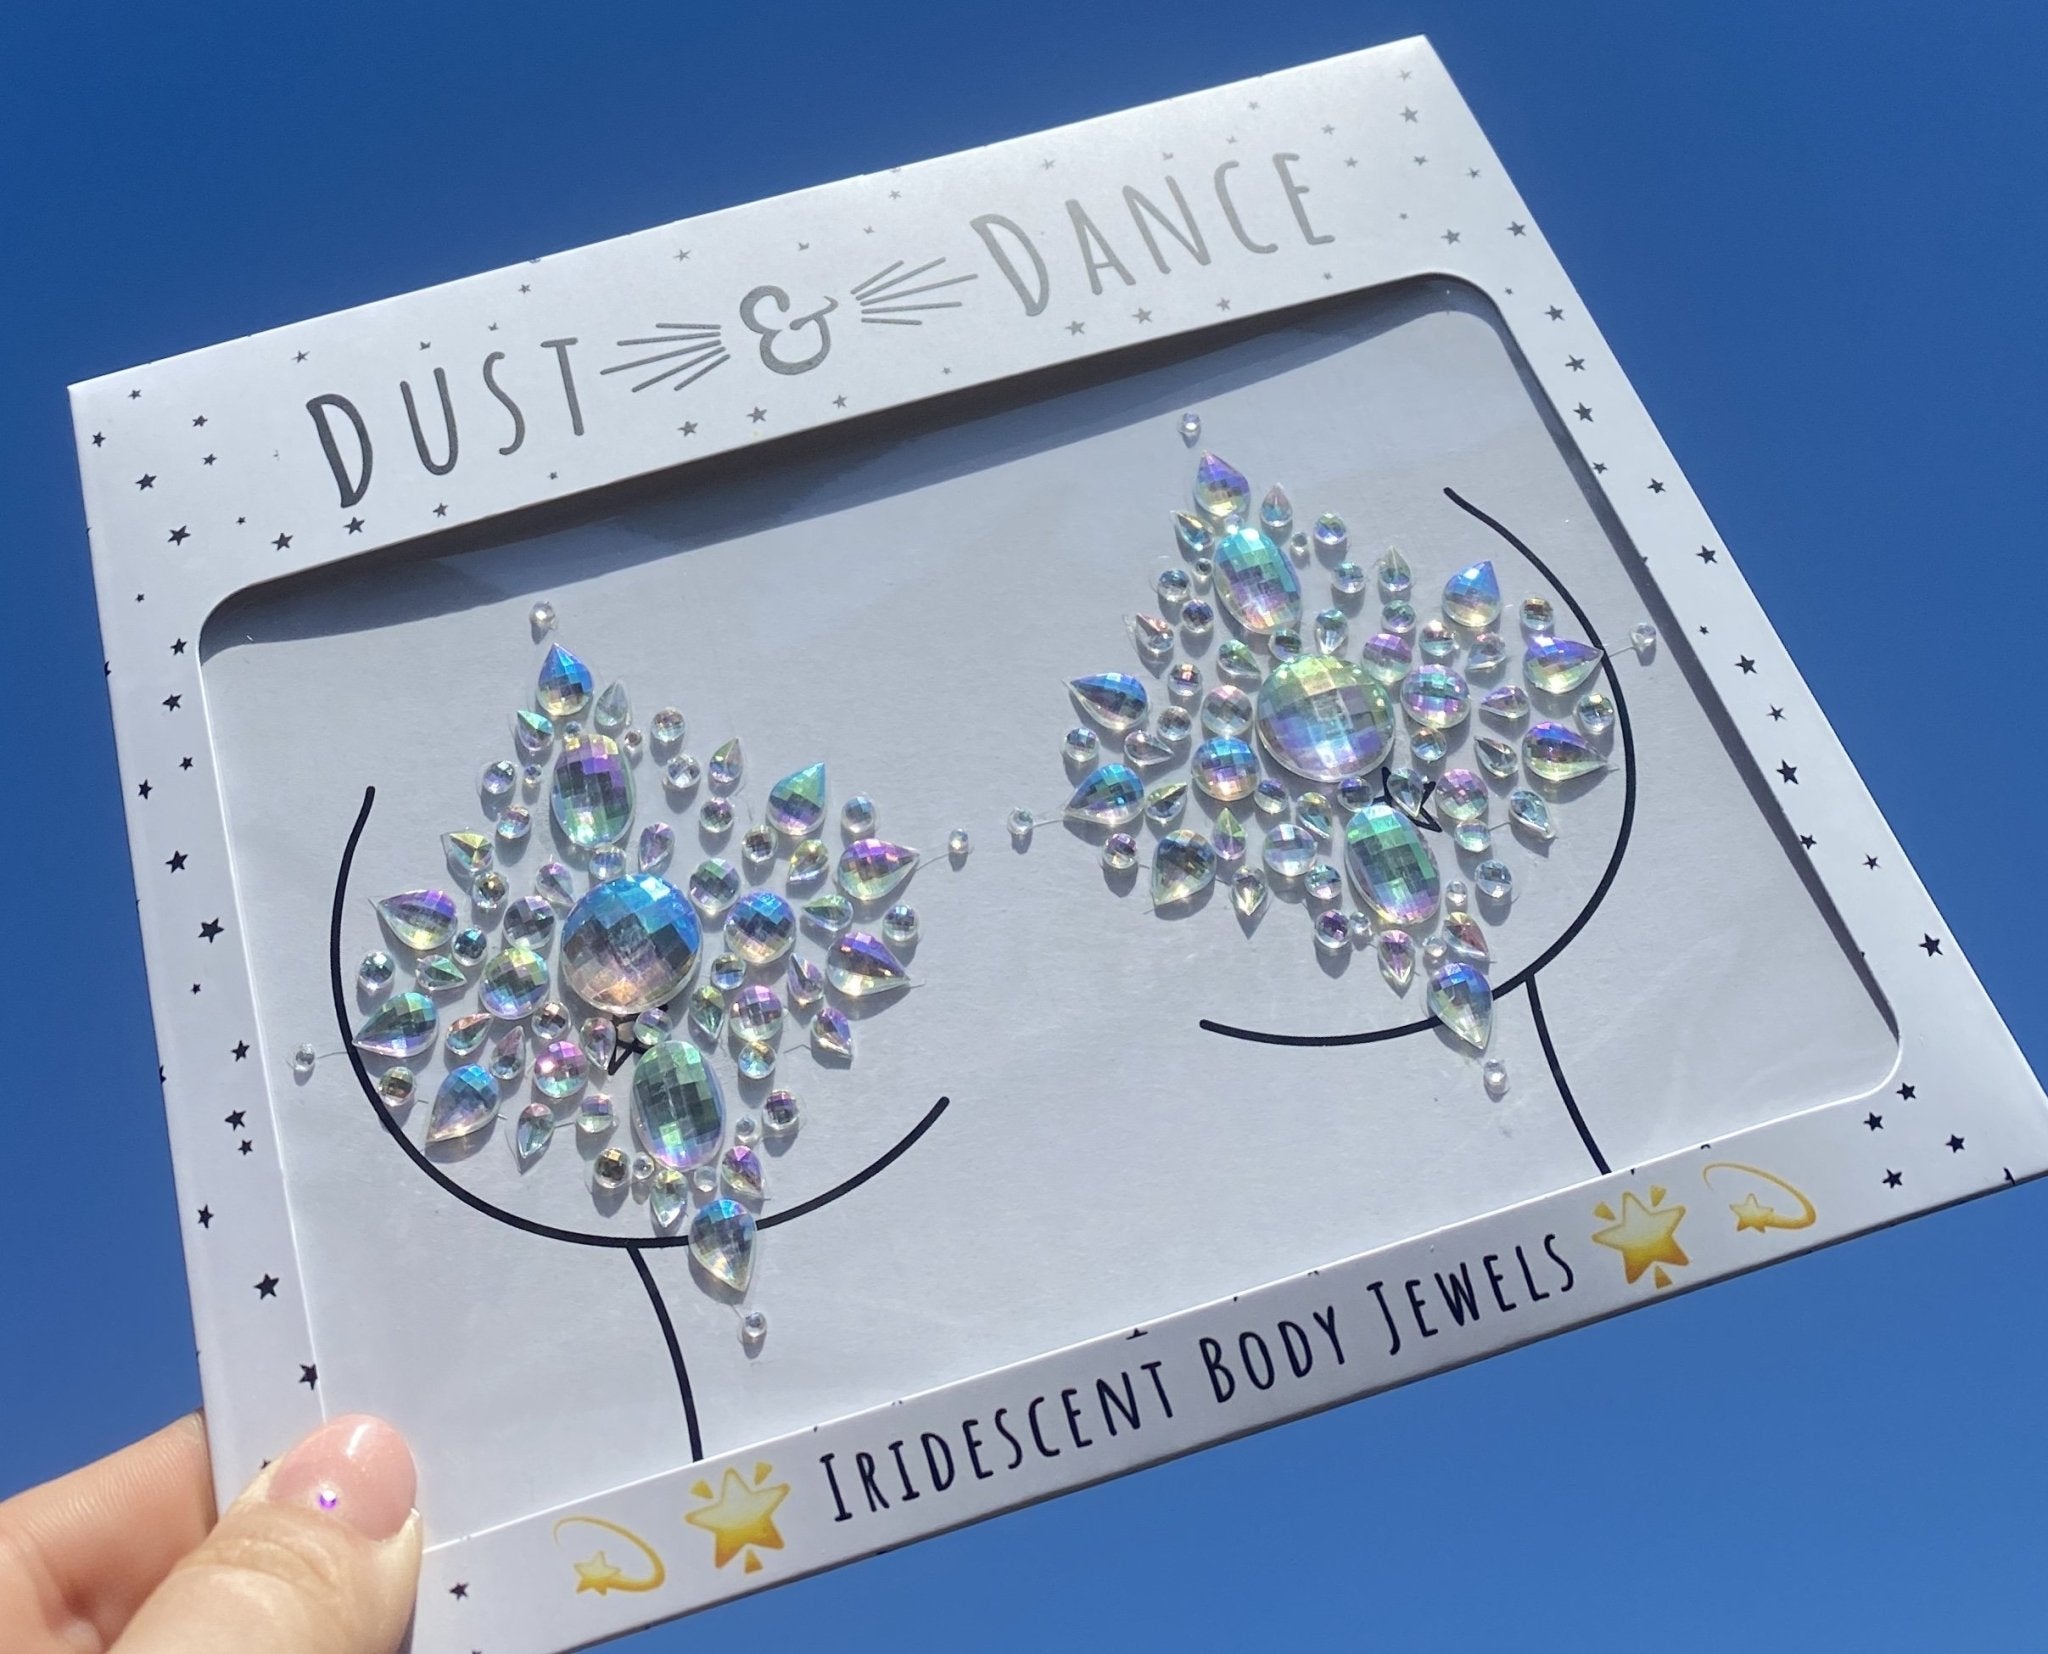 NEW! Iridescent Body Jewels - Dust & Dance